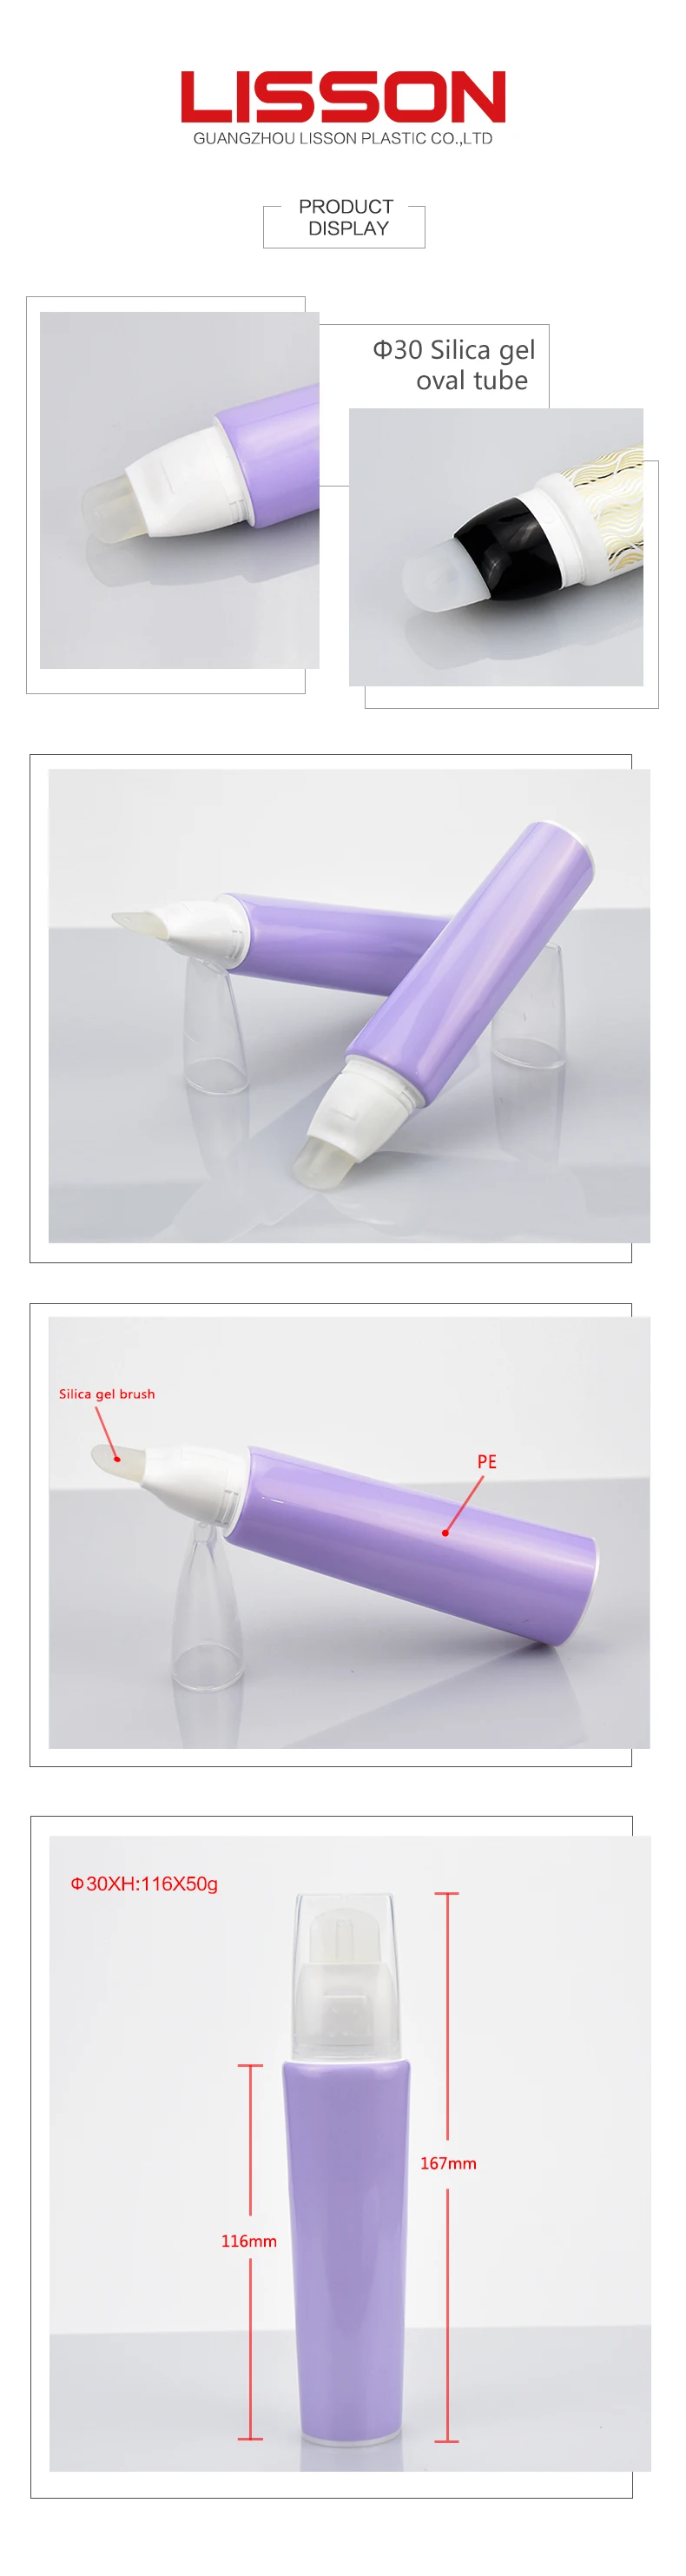 100ml Empty Plastic Tube with Soft Silica Rubber Gel Spatula Tip